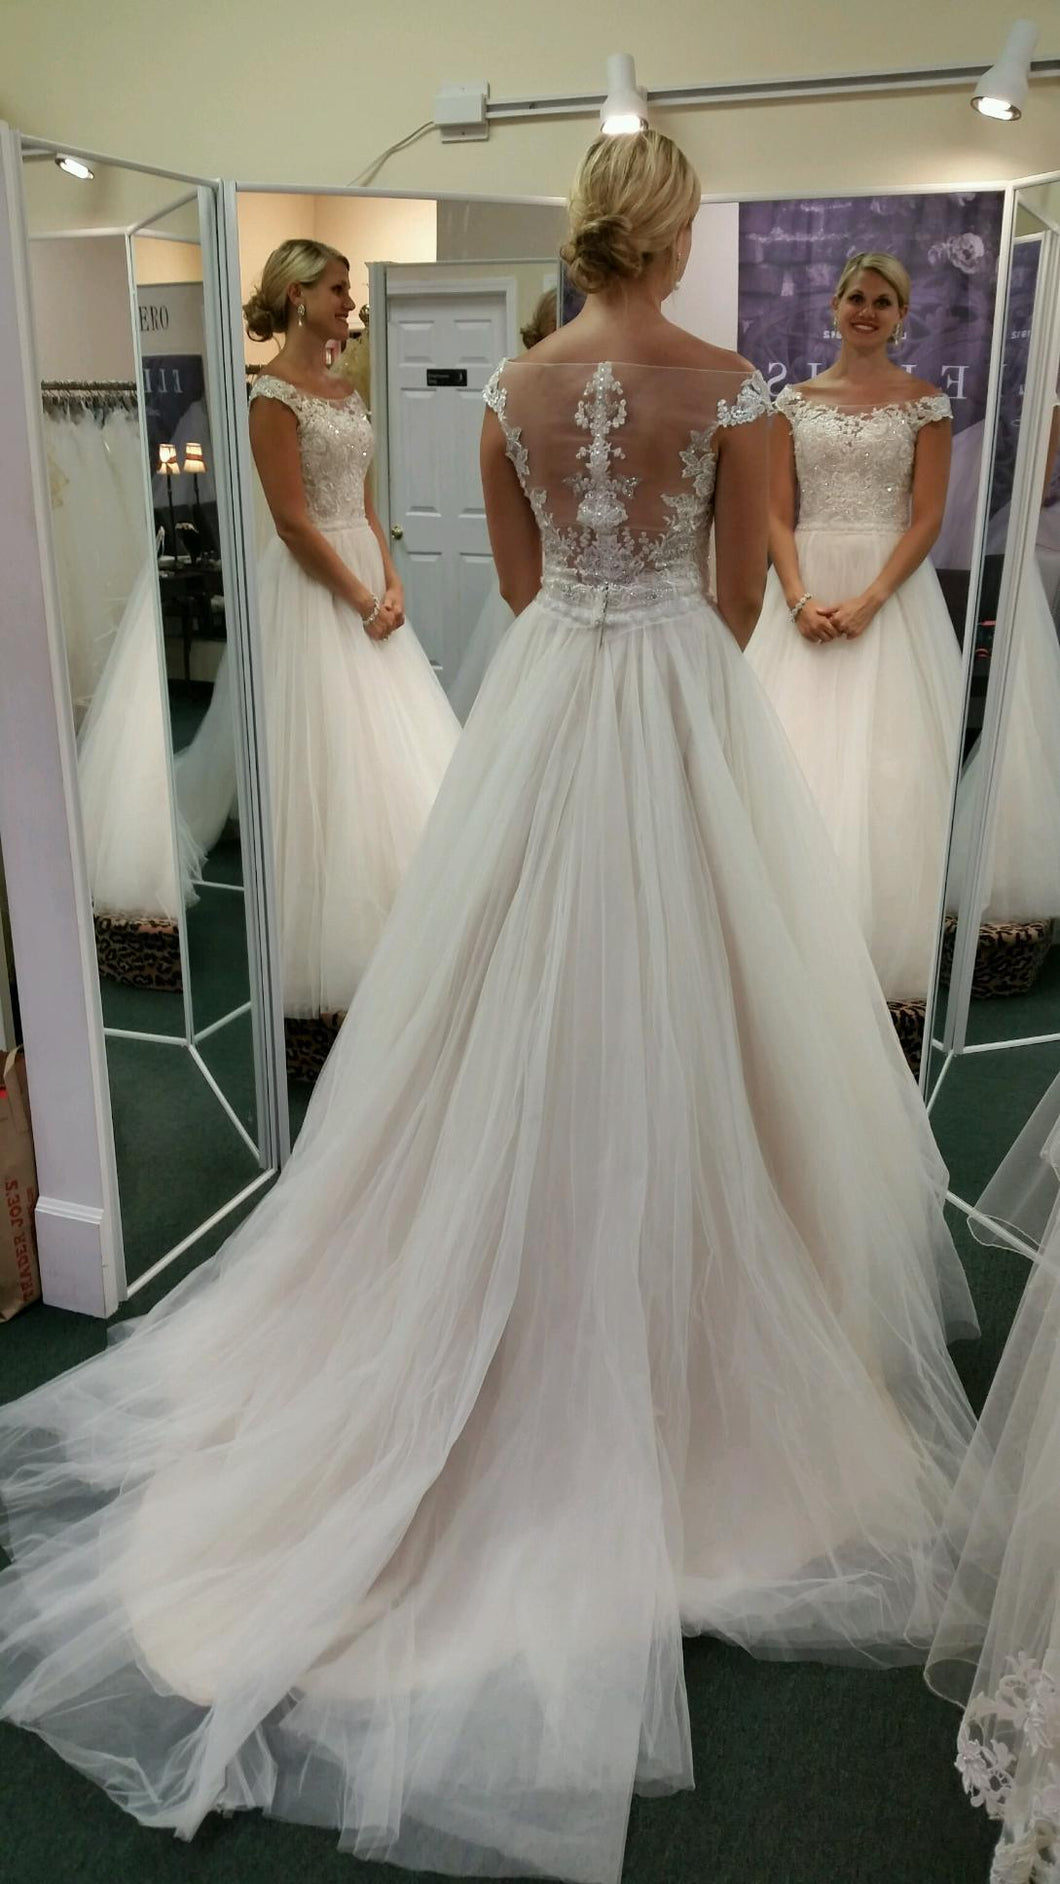 Maggie Sottero 'Montgomery ' wedding dress size-06 NEW